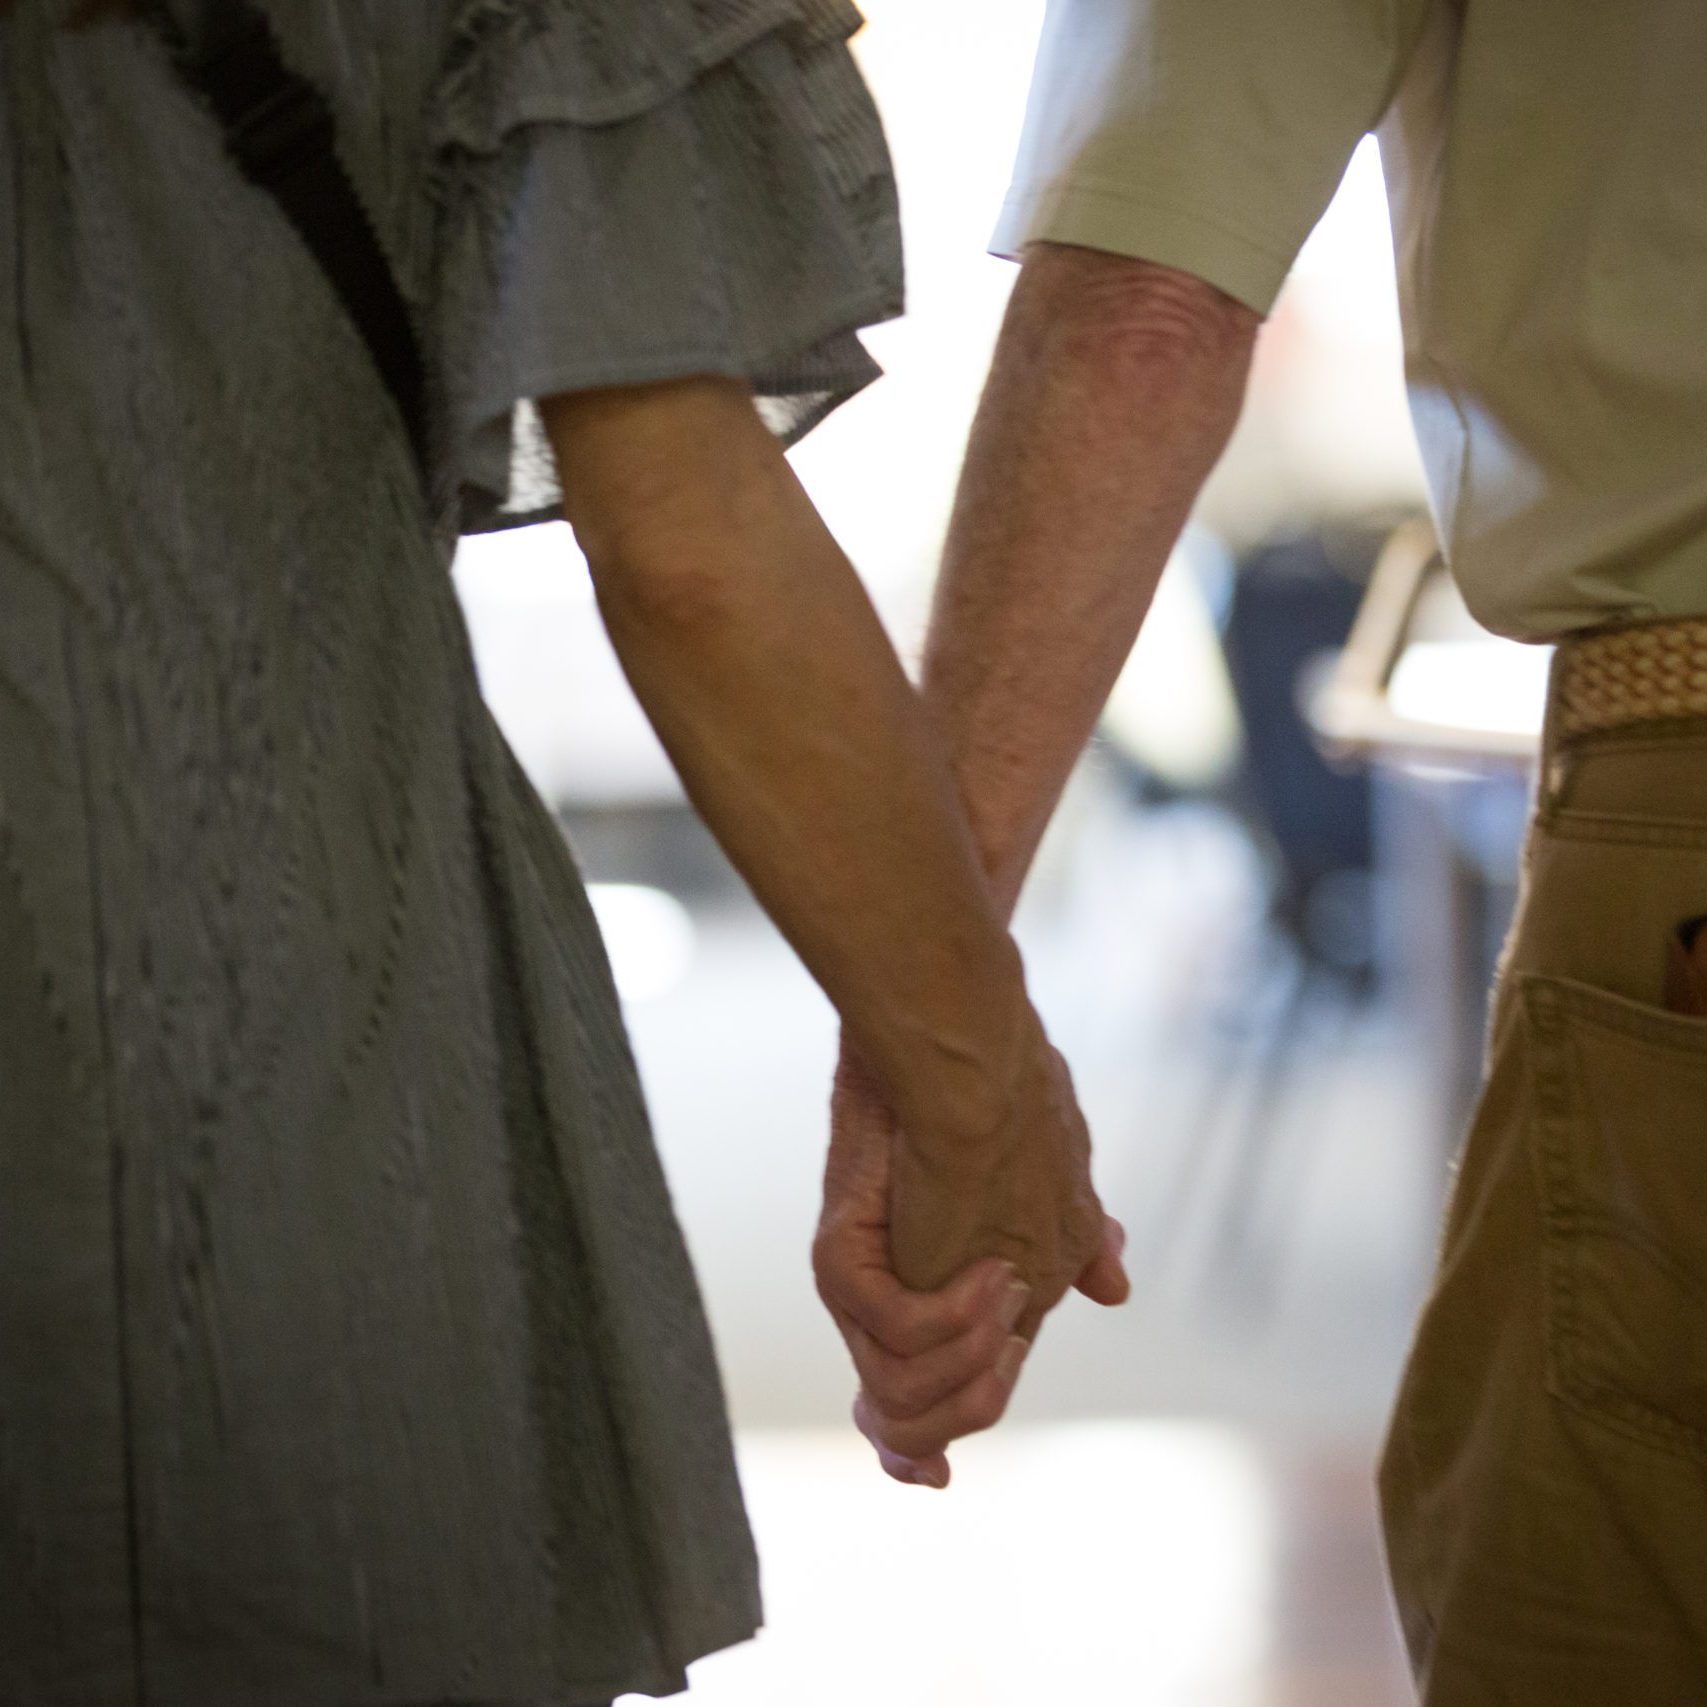 An older adult couple holding hands - closeup